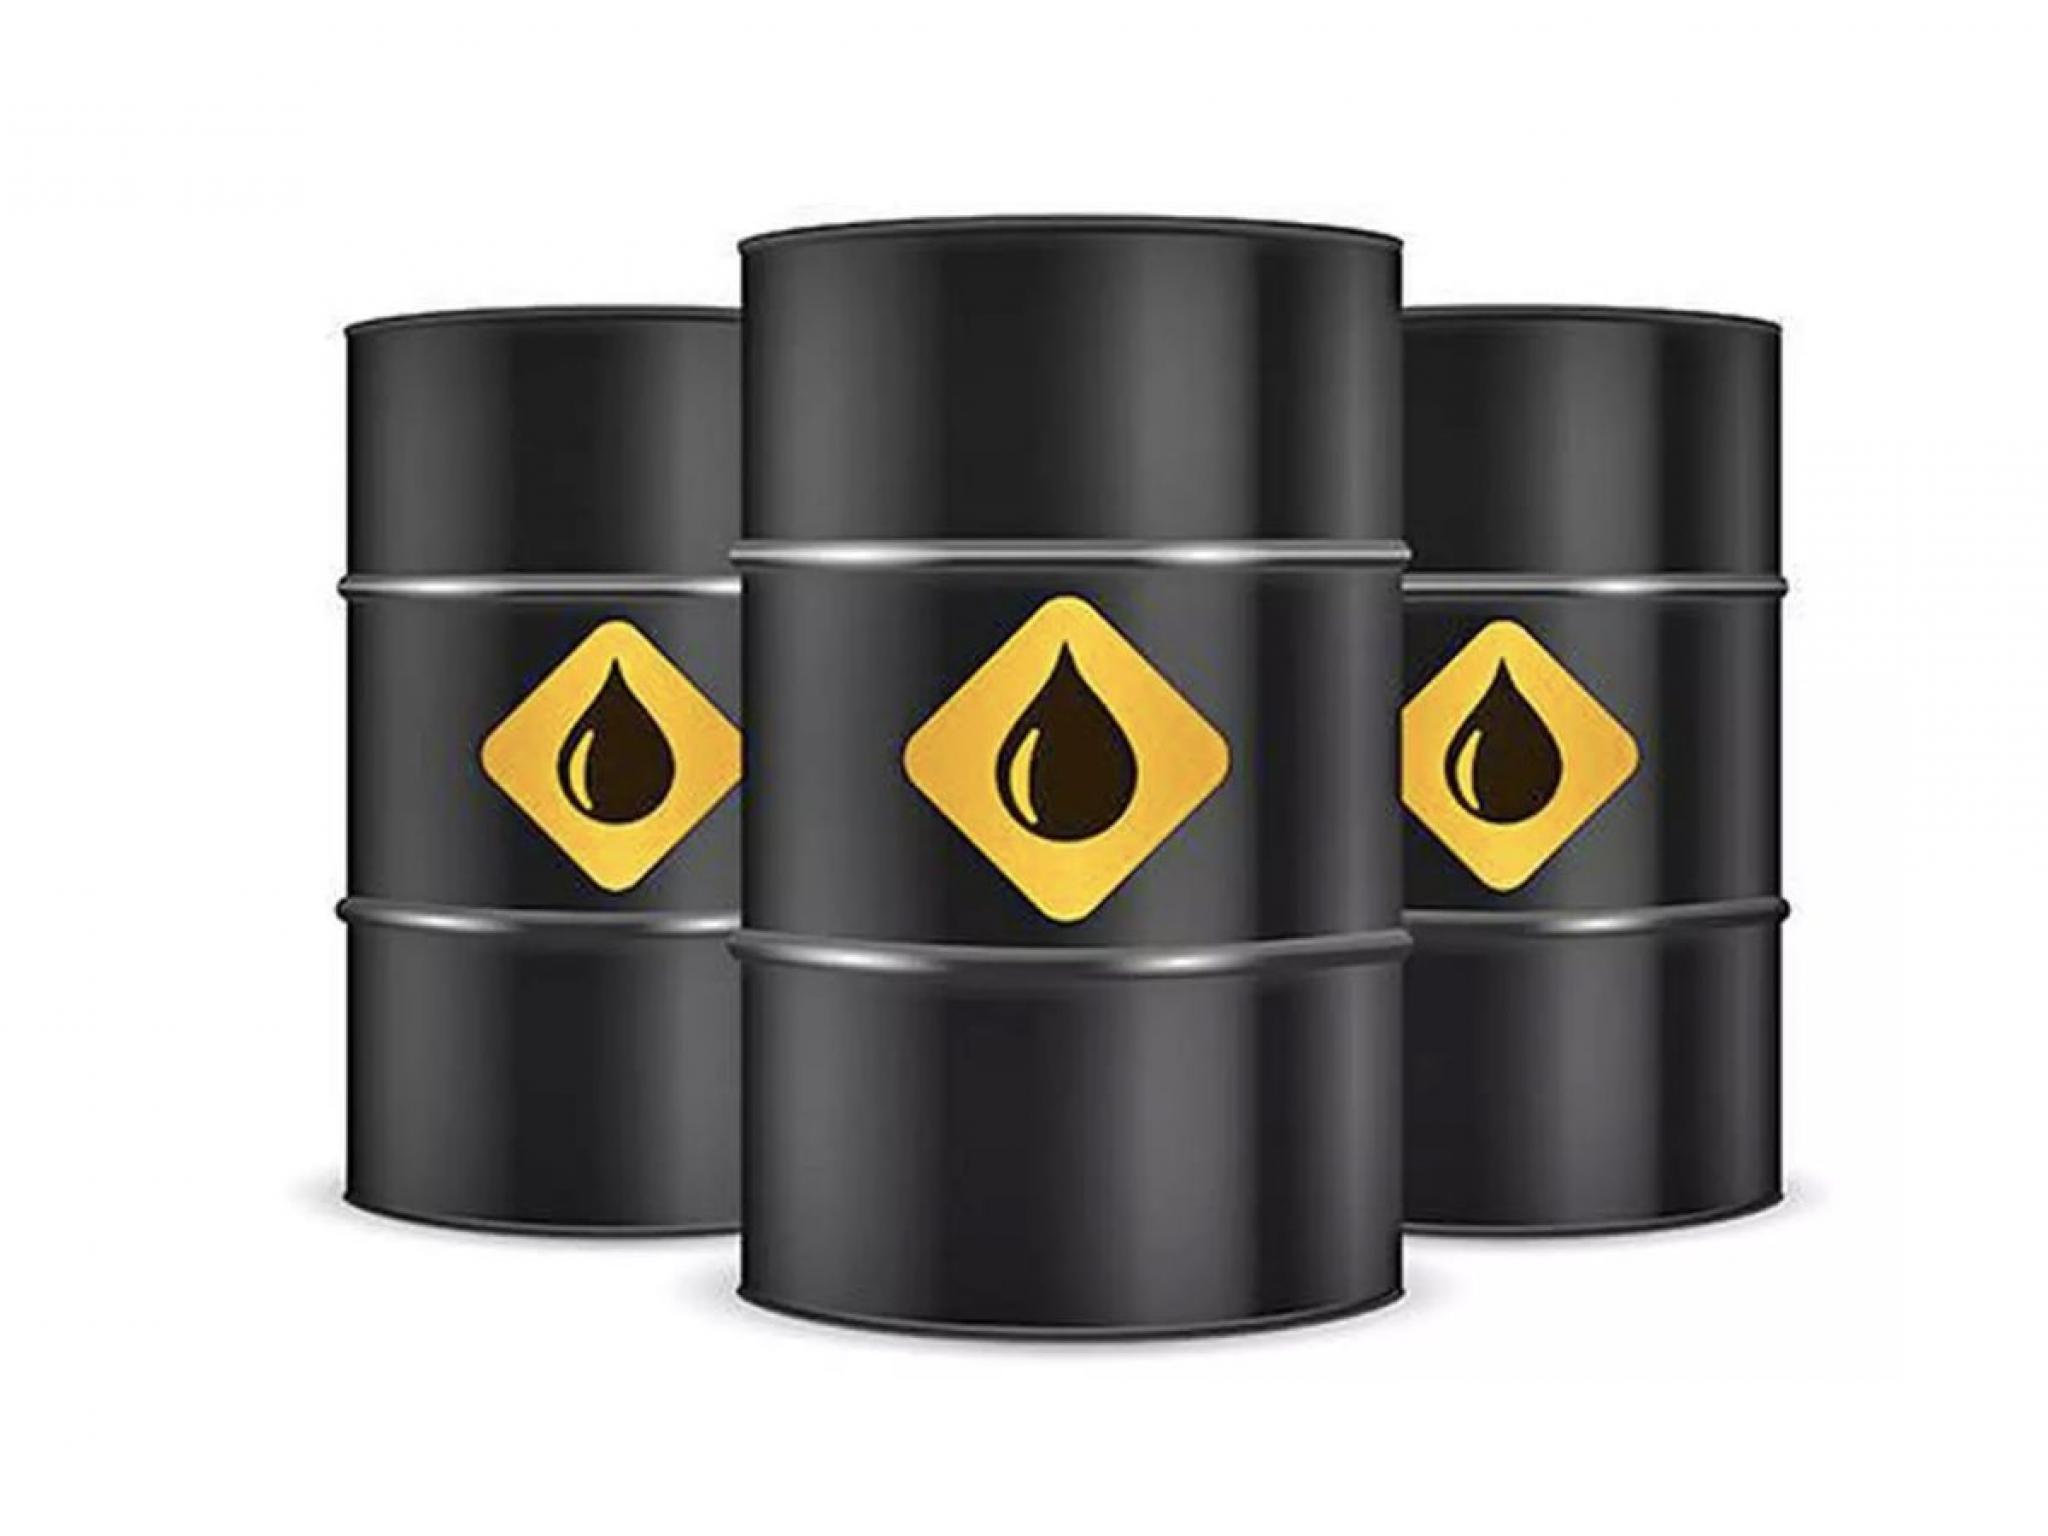  crude-oil-falls-over-1-first-wave-biopharma-shares-spike-higher 